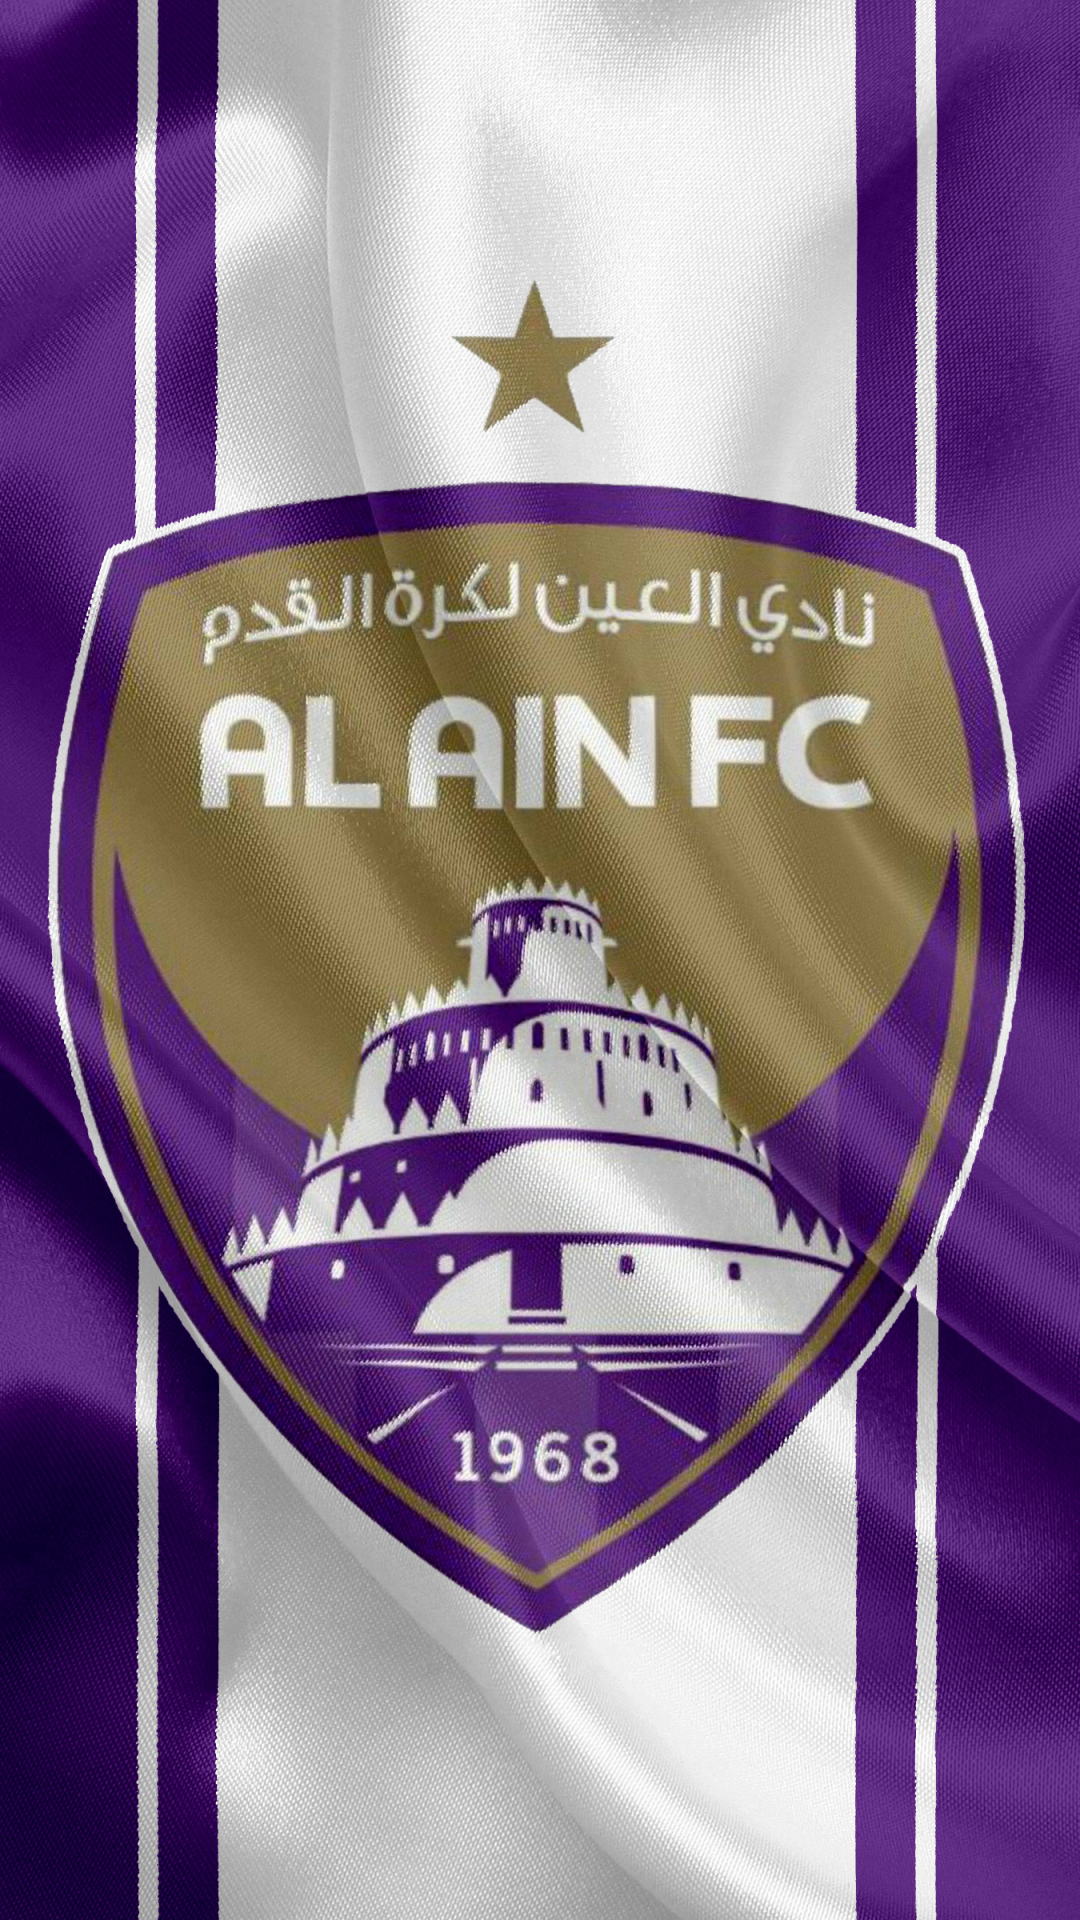 باشگاه فوتبال العین (Al Ain FC)